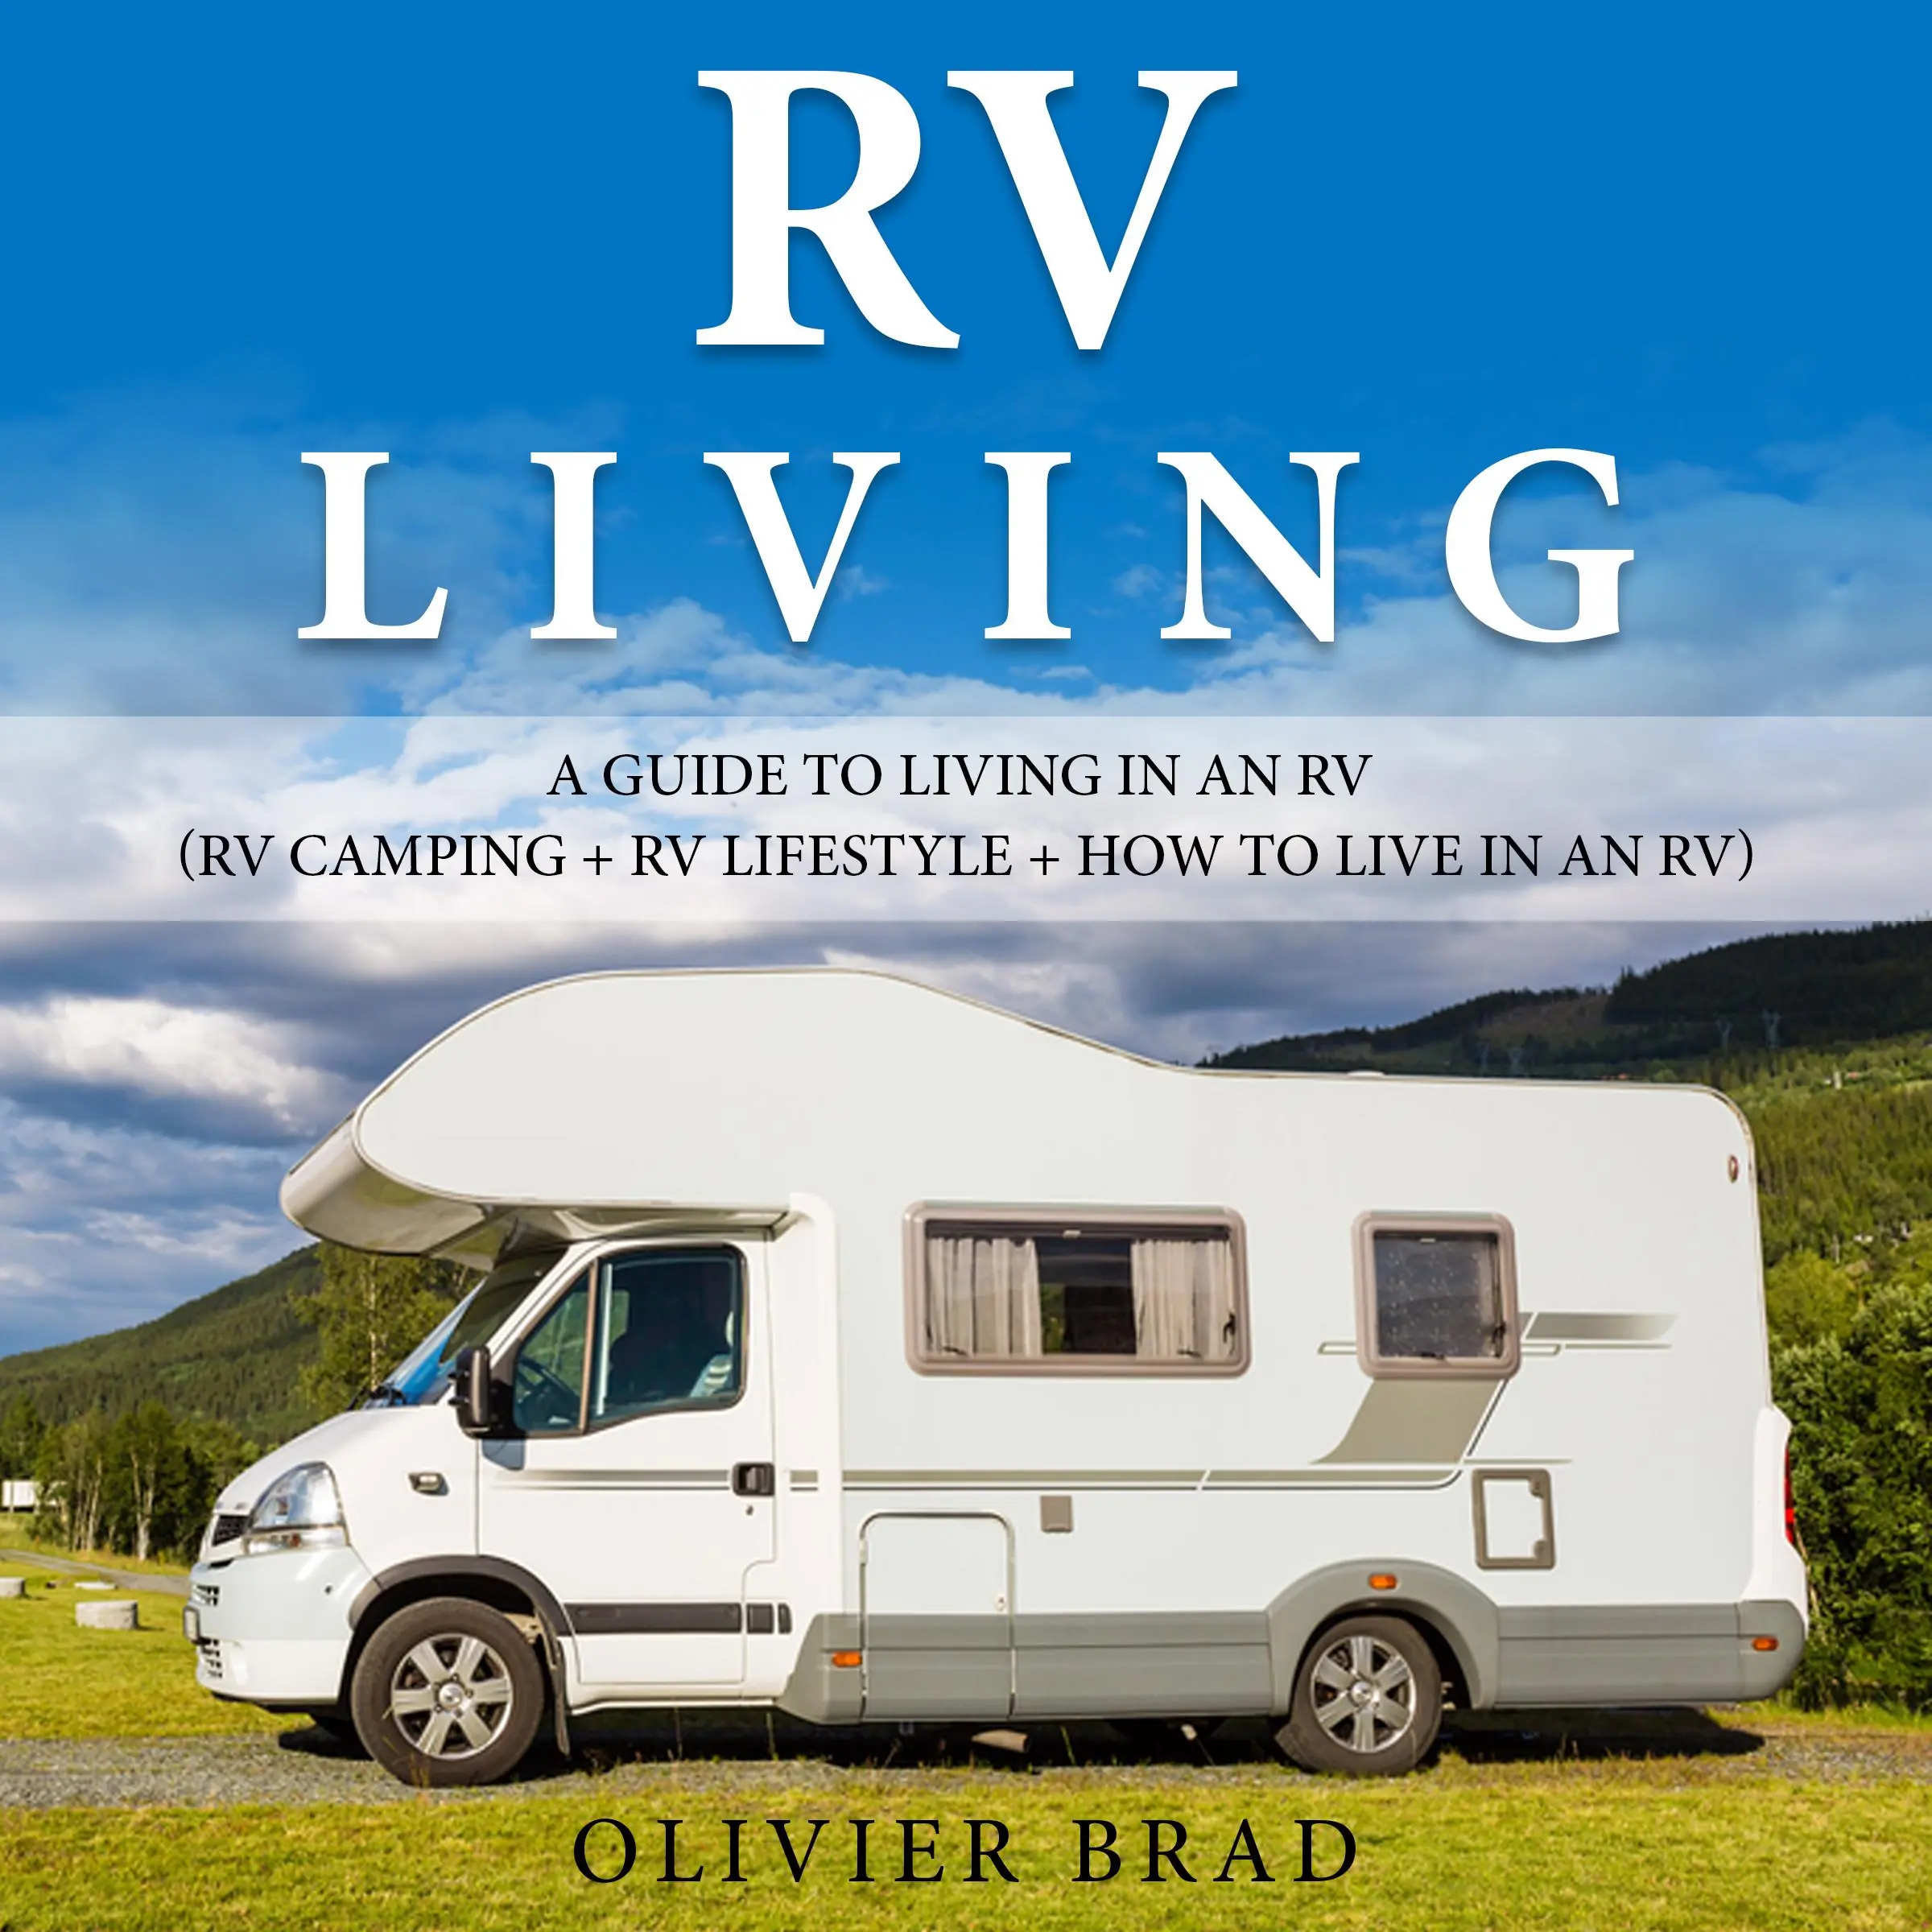 RV Living by Olivier Brad Audiobook